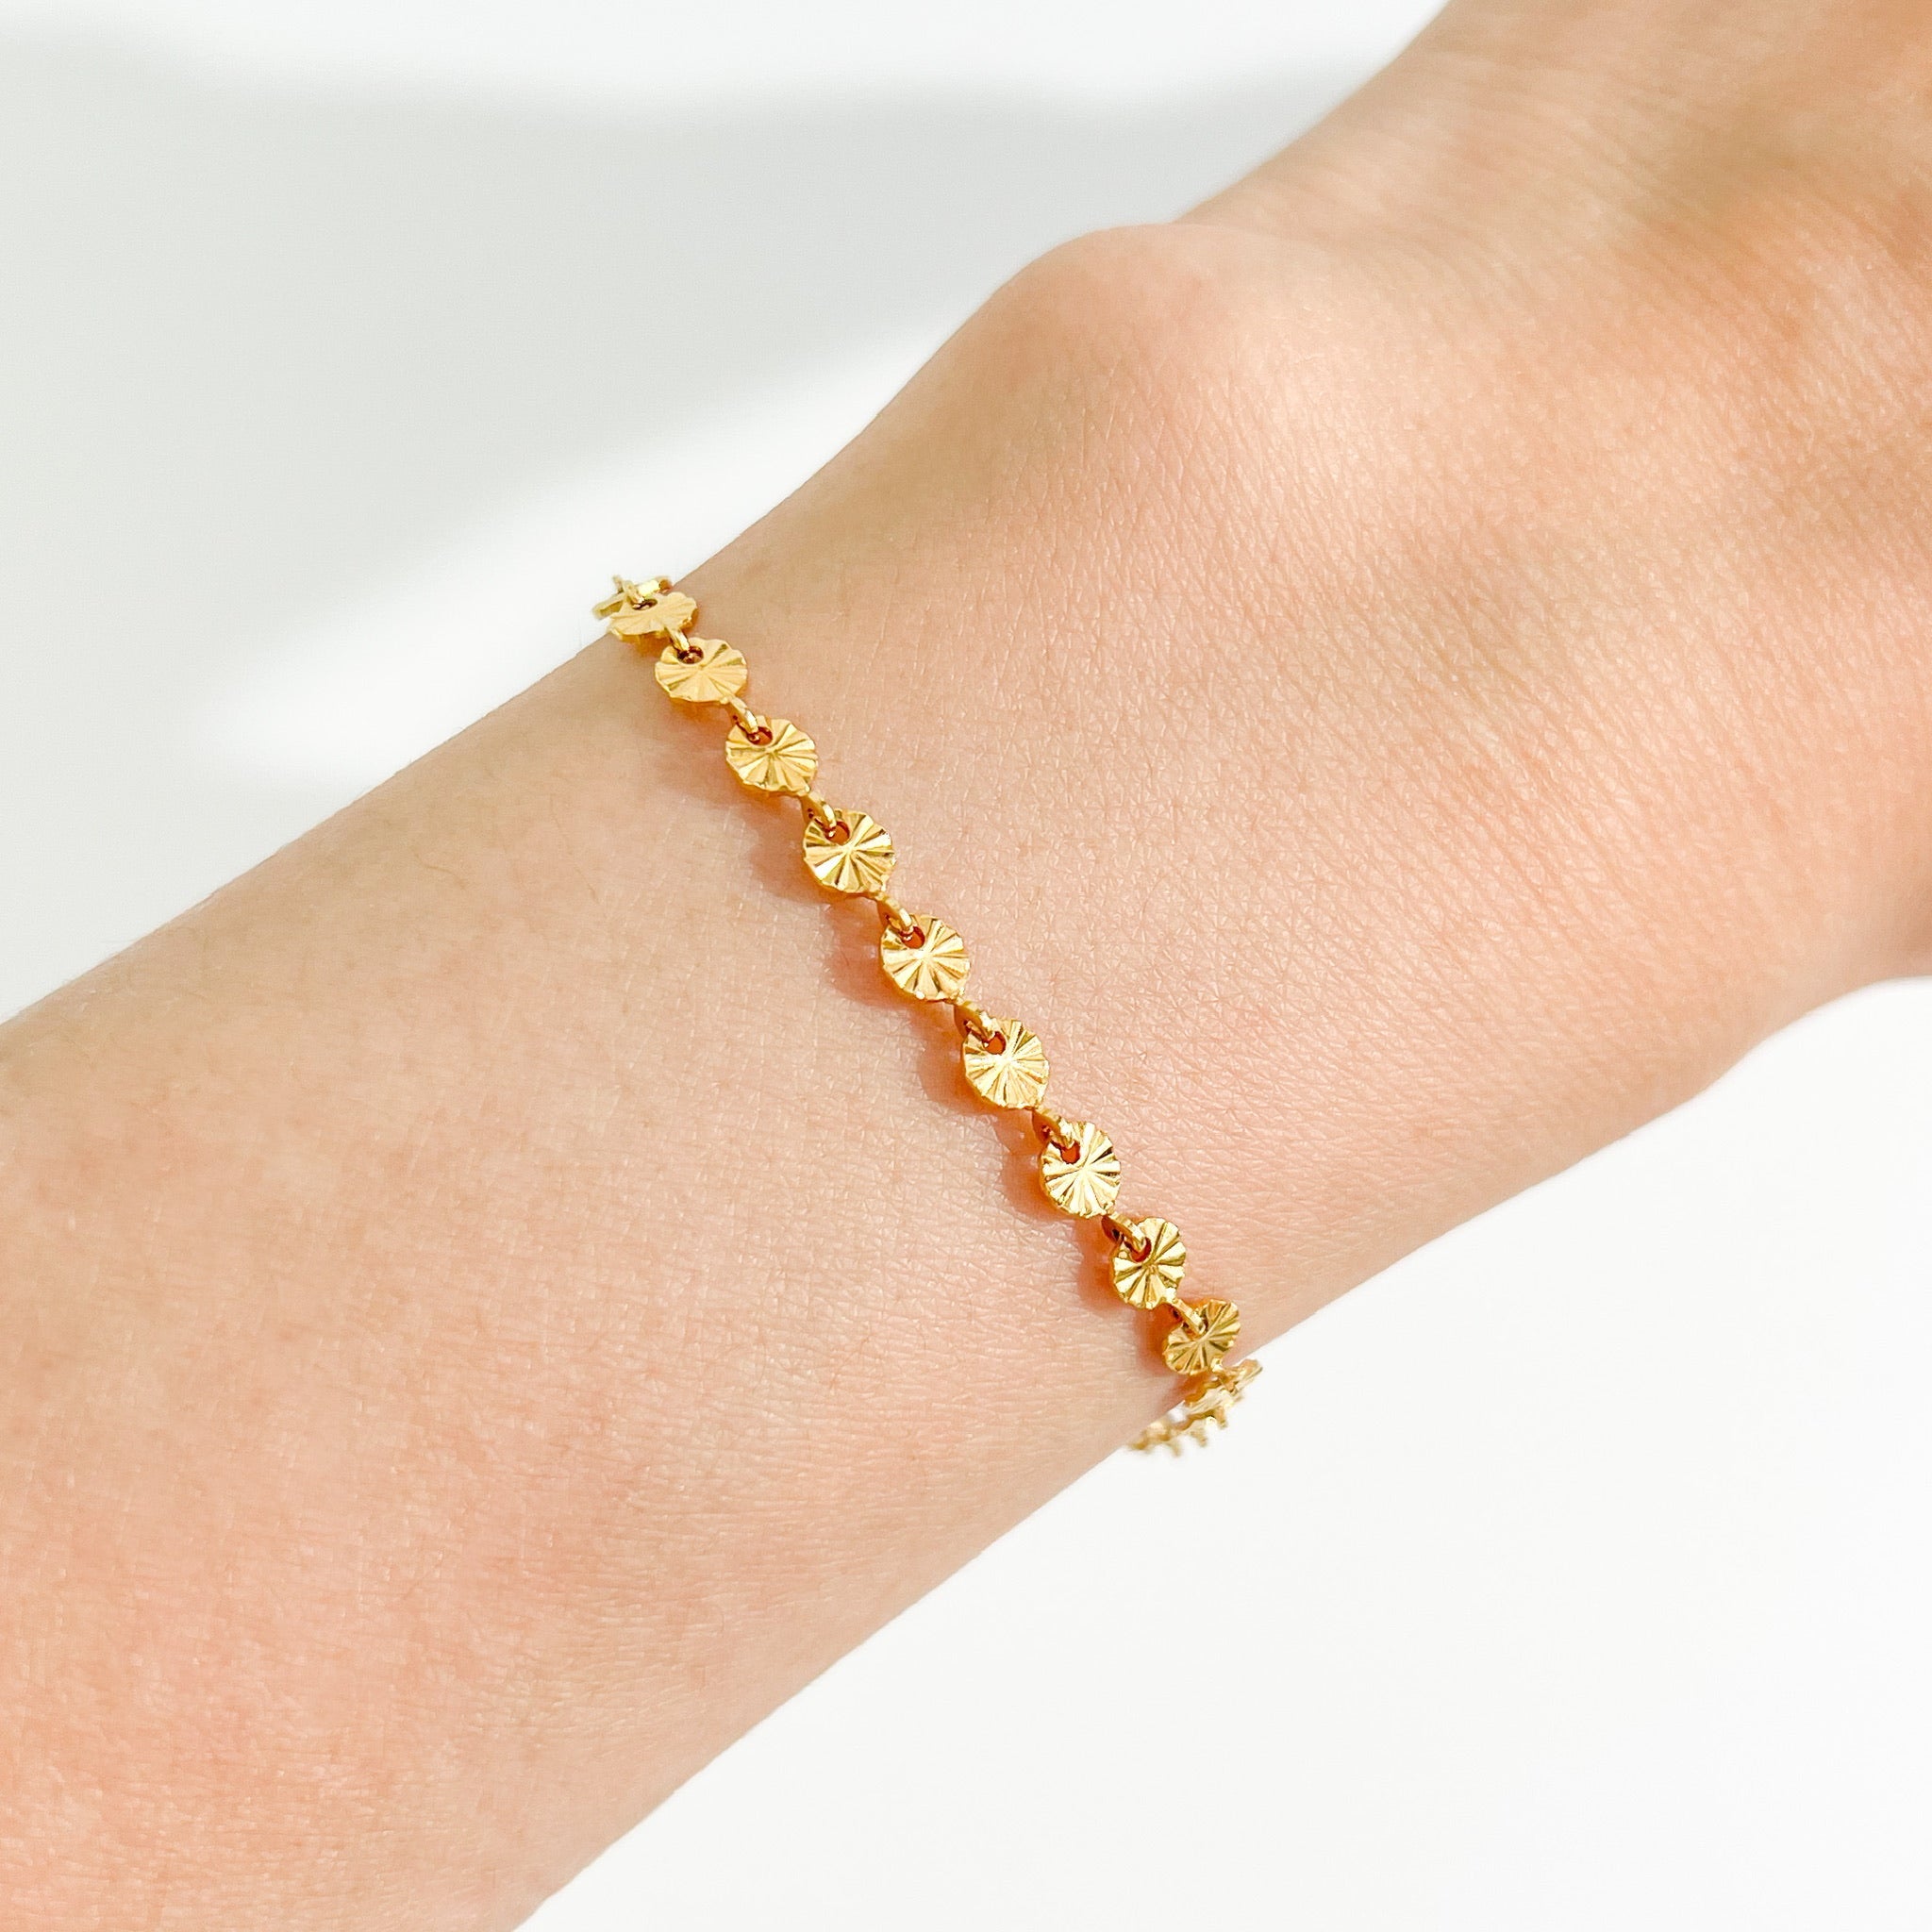 Sunburst Chain Bracelet in Gold - Flaire & Co.